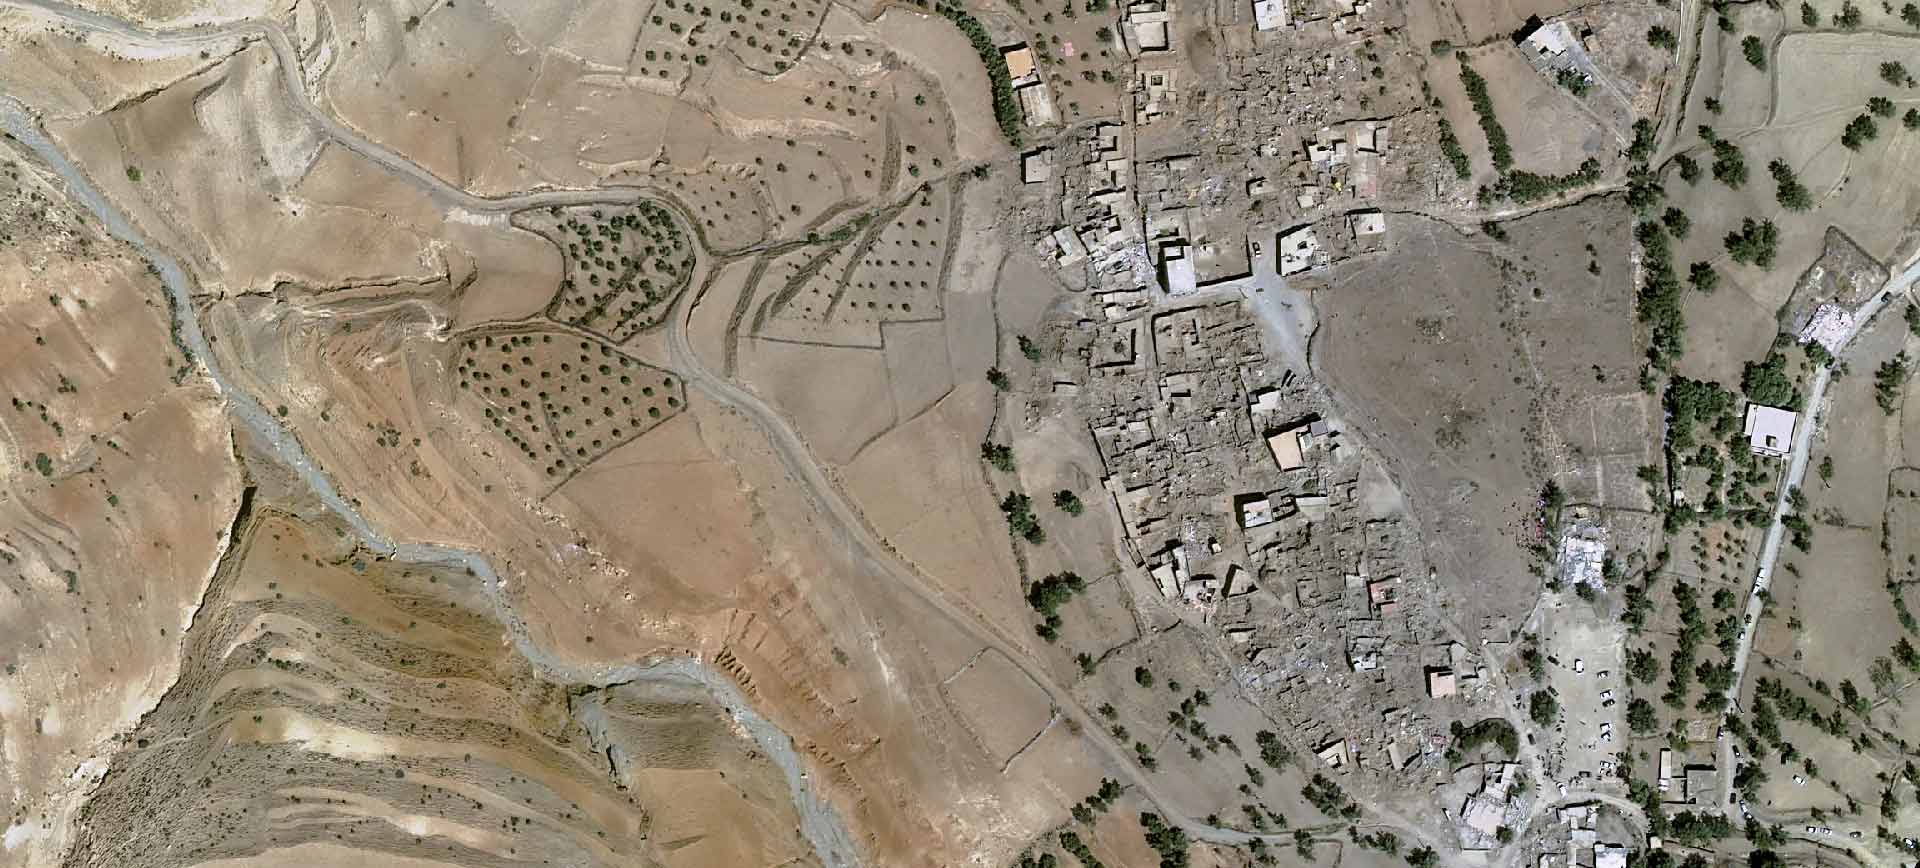 Pléiades Neo image satellite - Amizmiz - Earthquake in Morocco -30cm resolution